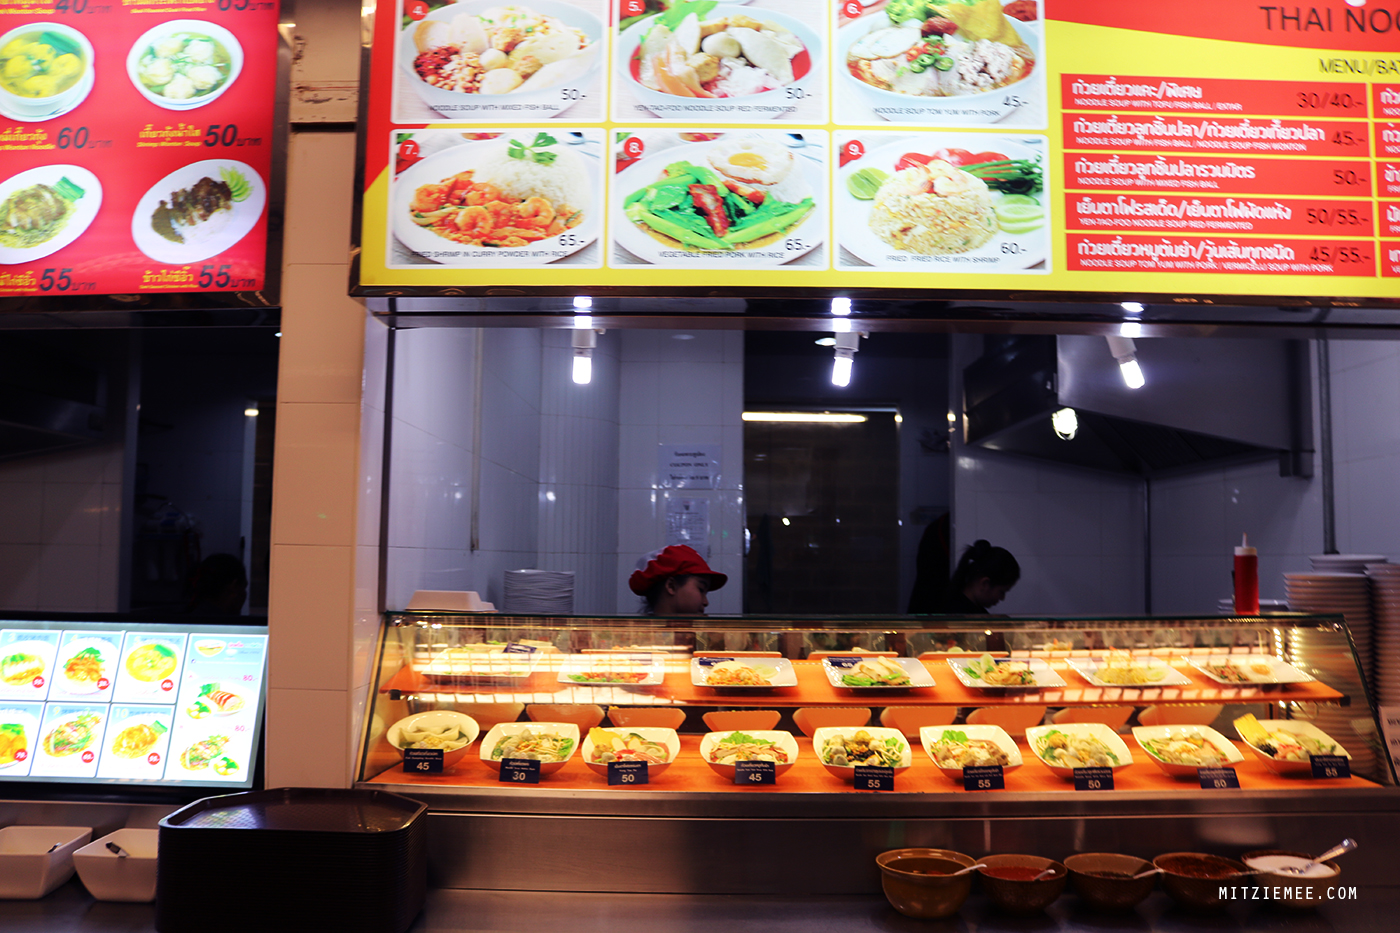 Bangkok Airport Food Court